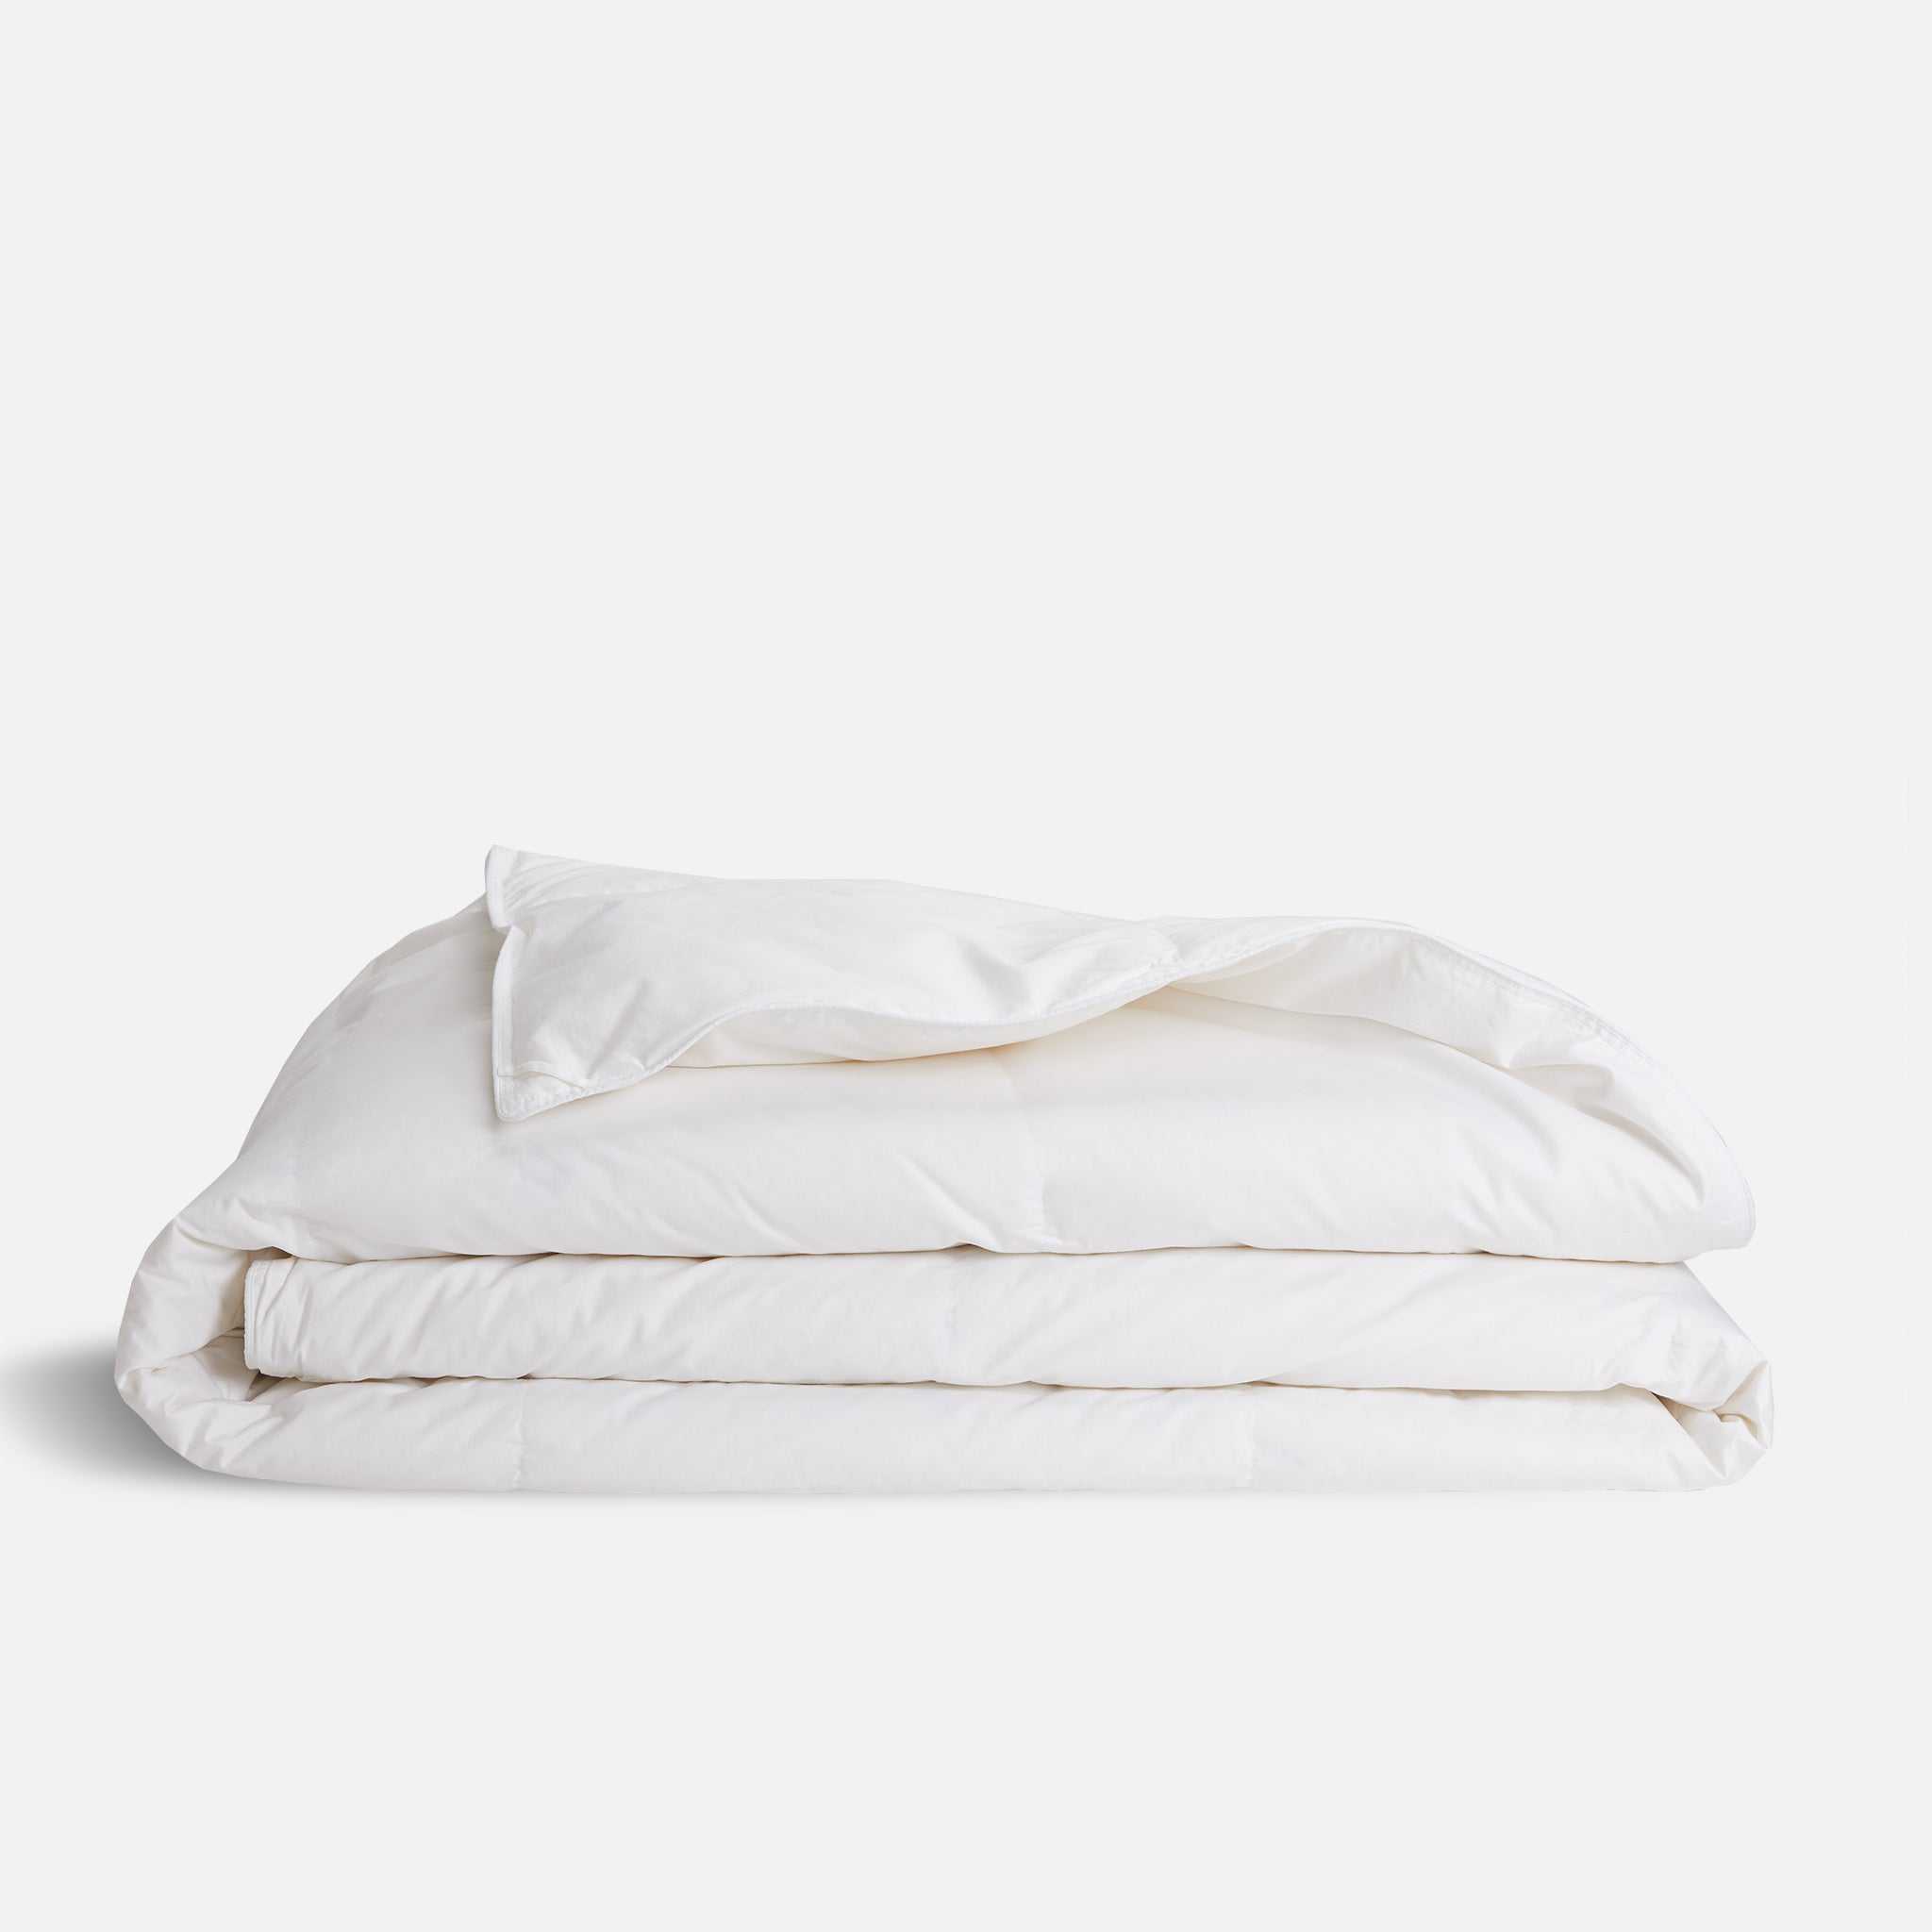 Brooklinen Down Alternative Comforter size Twin/Twin XL